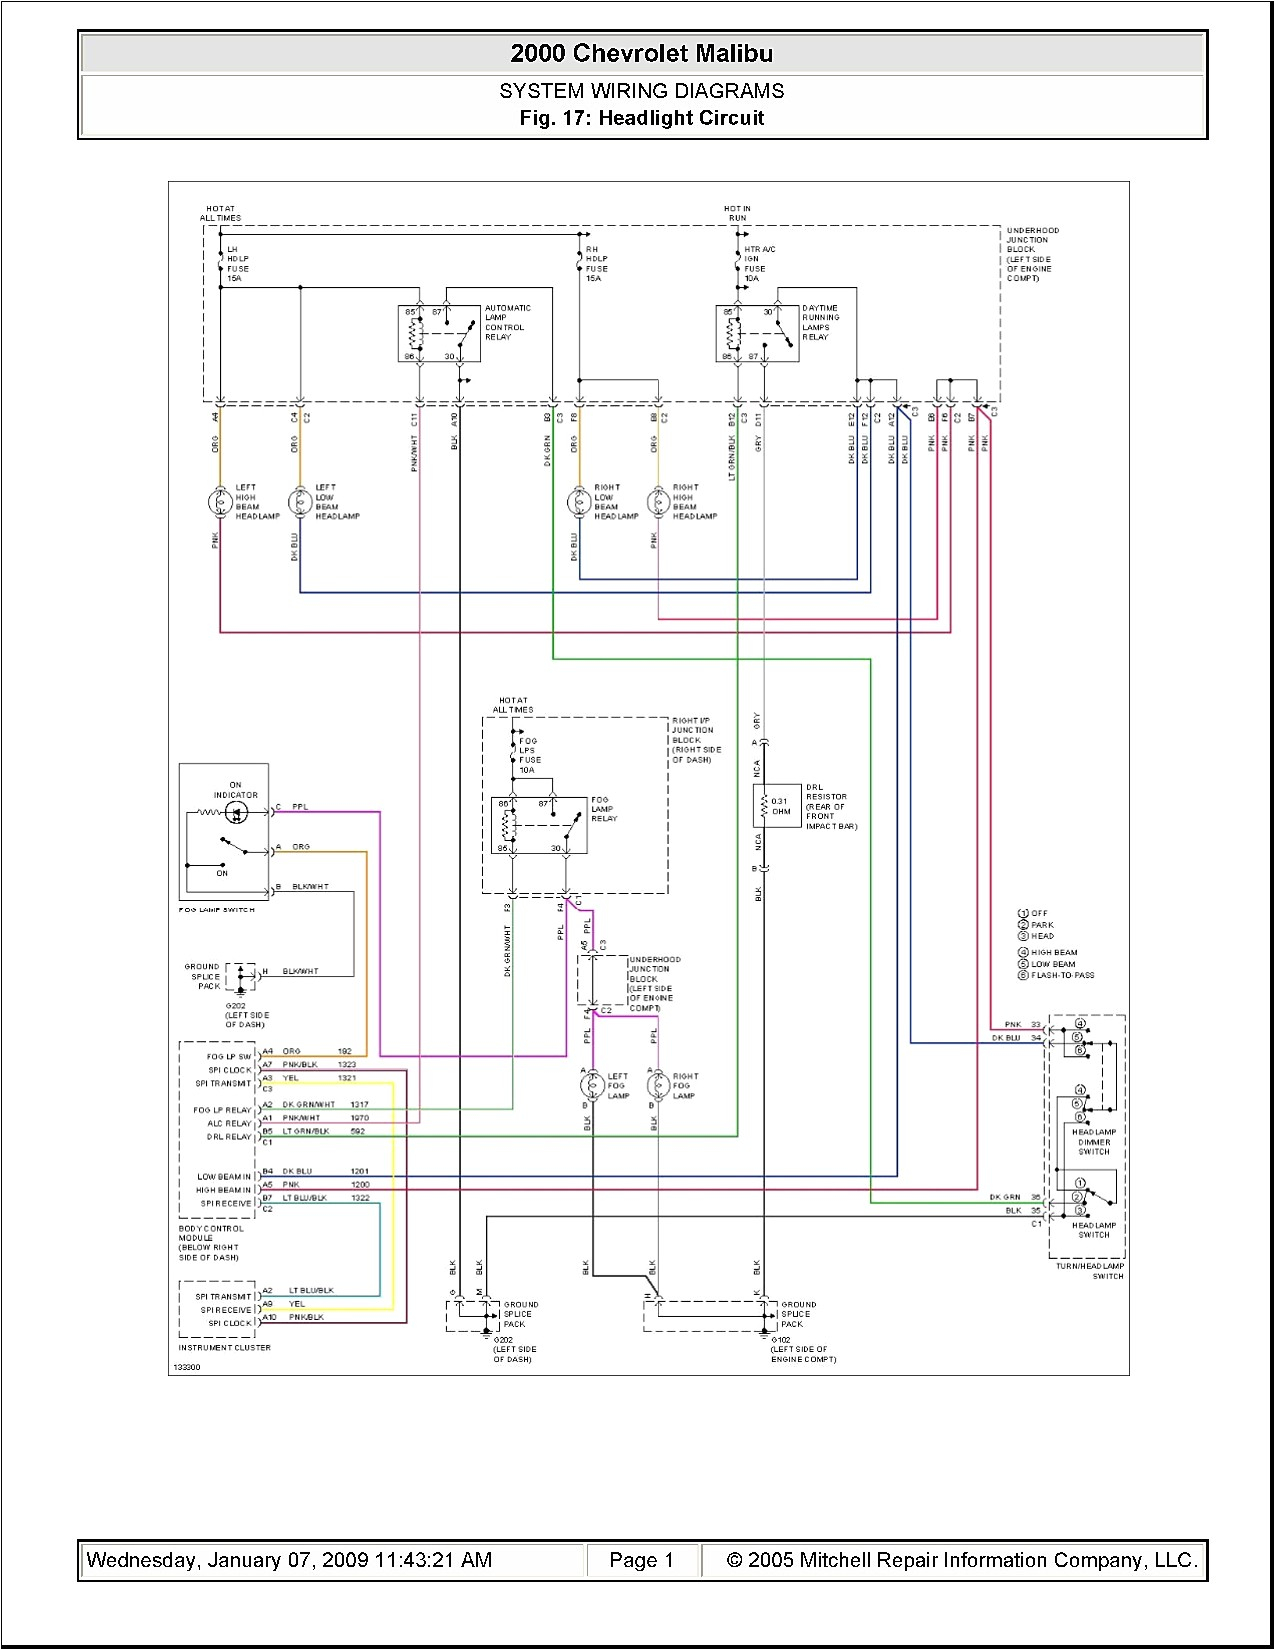 2004 hyundai santa fe radio wiring diagram awesome hyundai wiring diagrams free beautiful magnificent hyundai tiburon of 2004 hyundai santa fe radio wiring diagram jpg